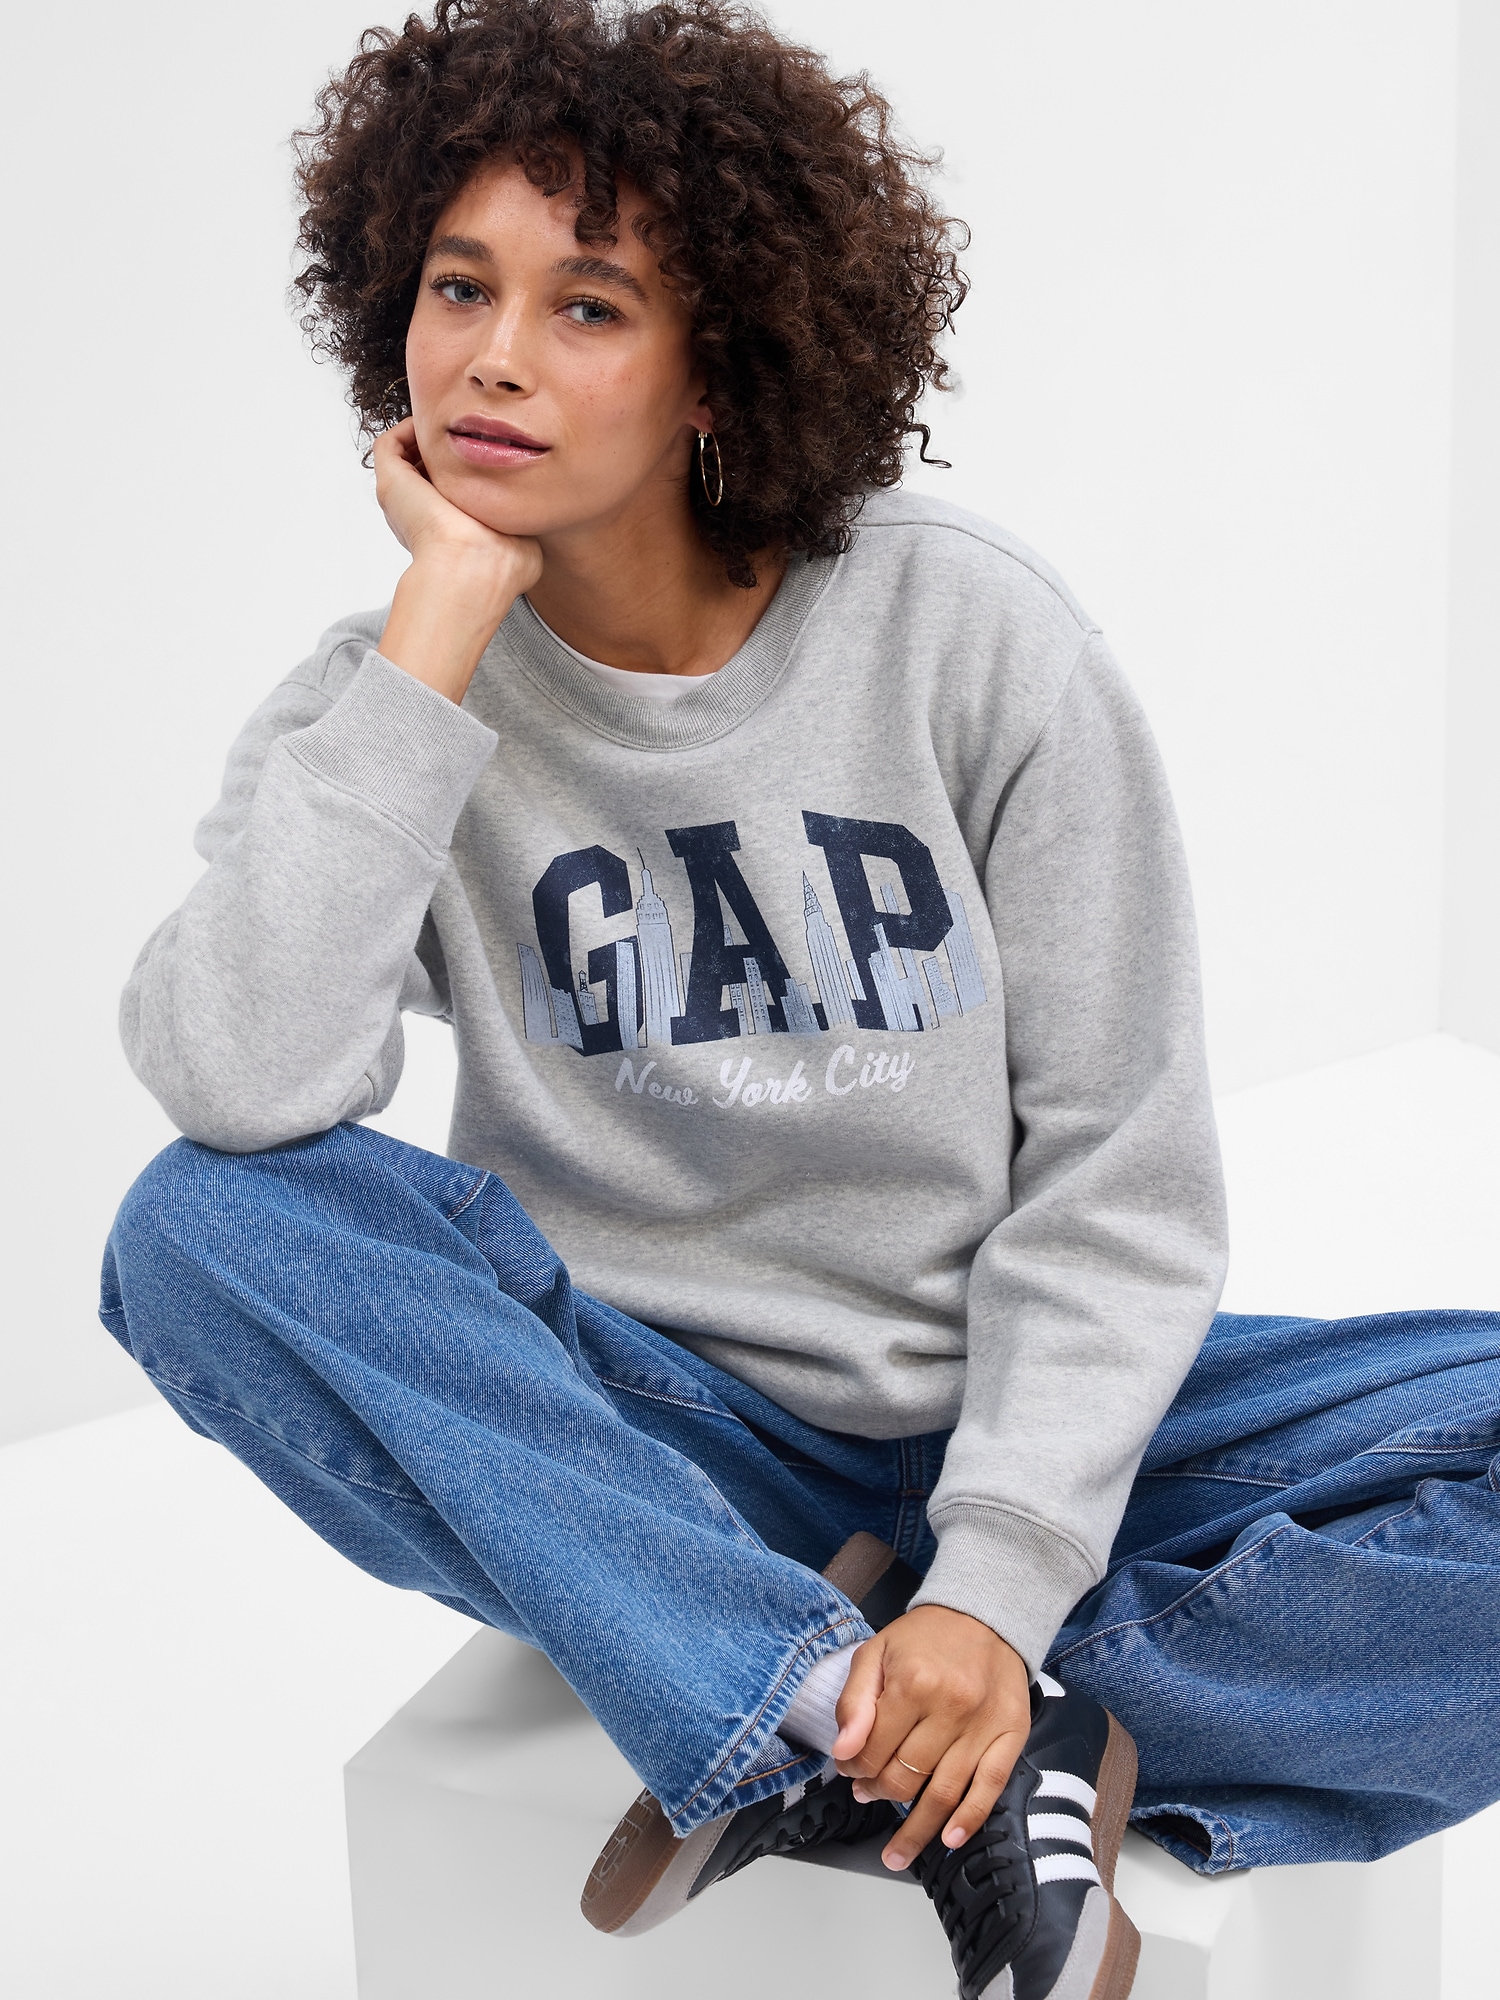 Gap Factory Women's Relaxed Gap Logo Graphic Sweatshirt NYC Spring Graphic Size XXL